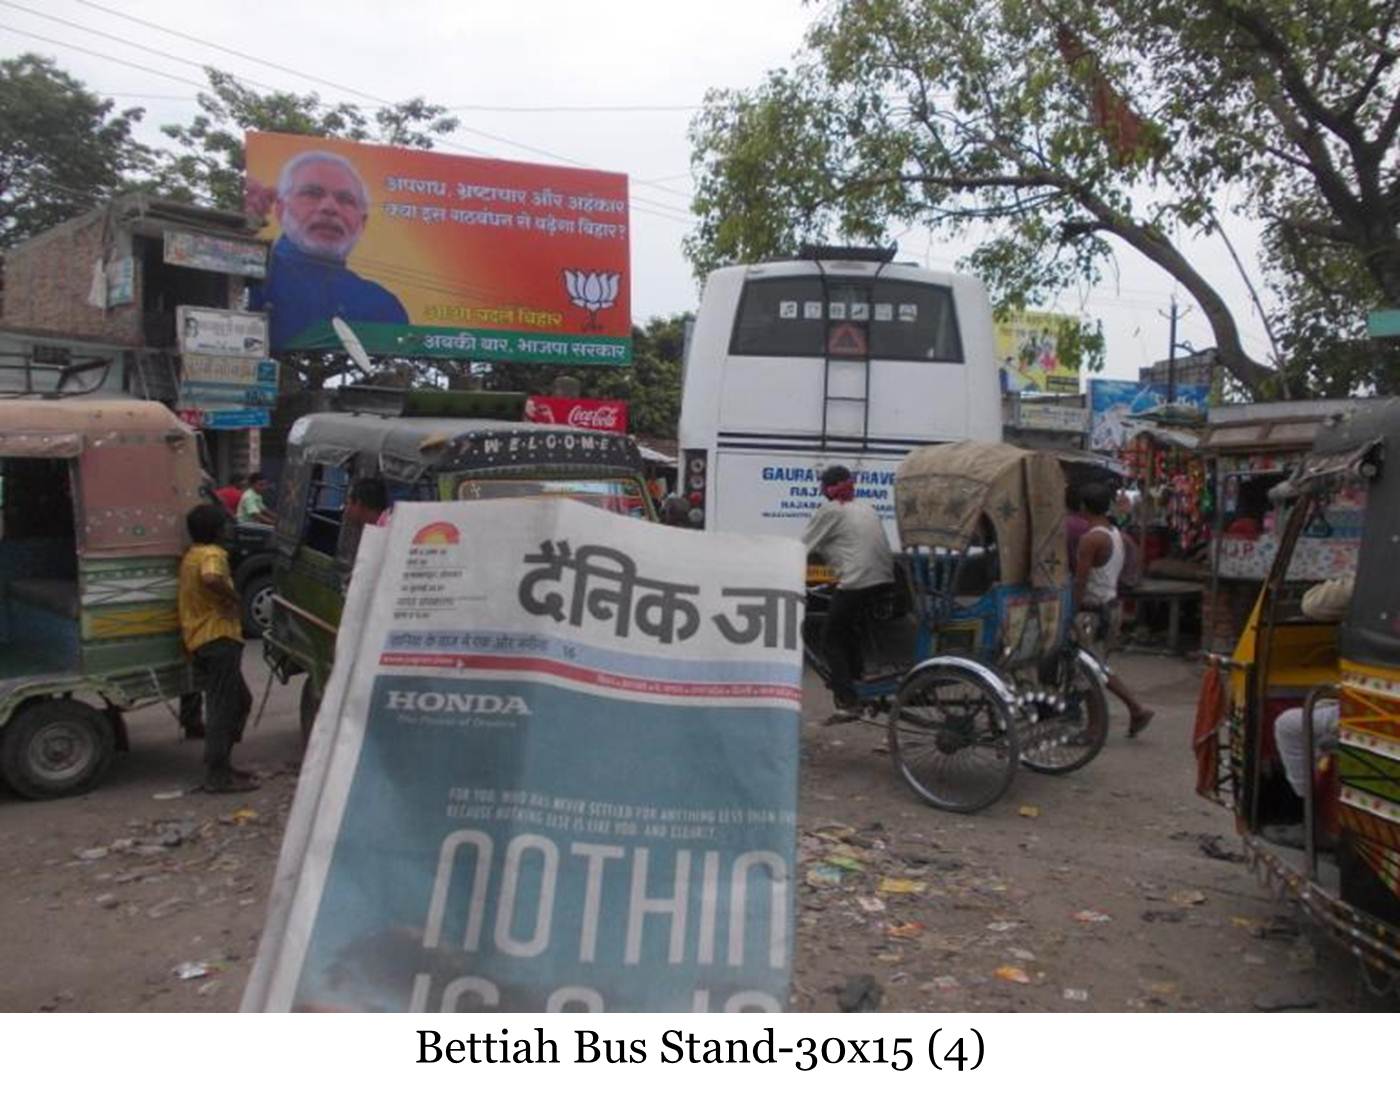 Bus Stand, Bettiah